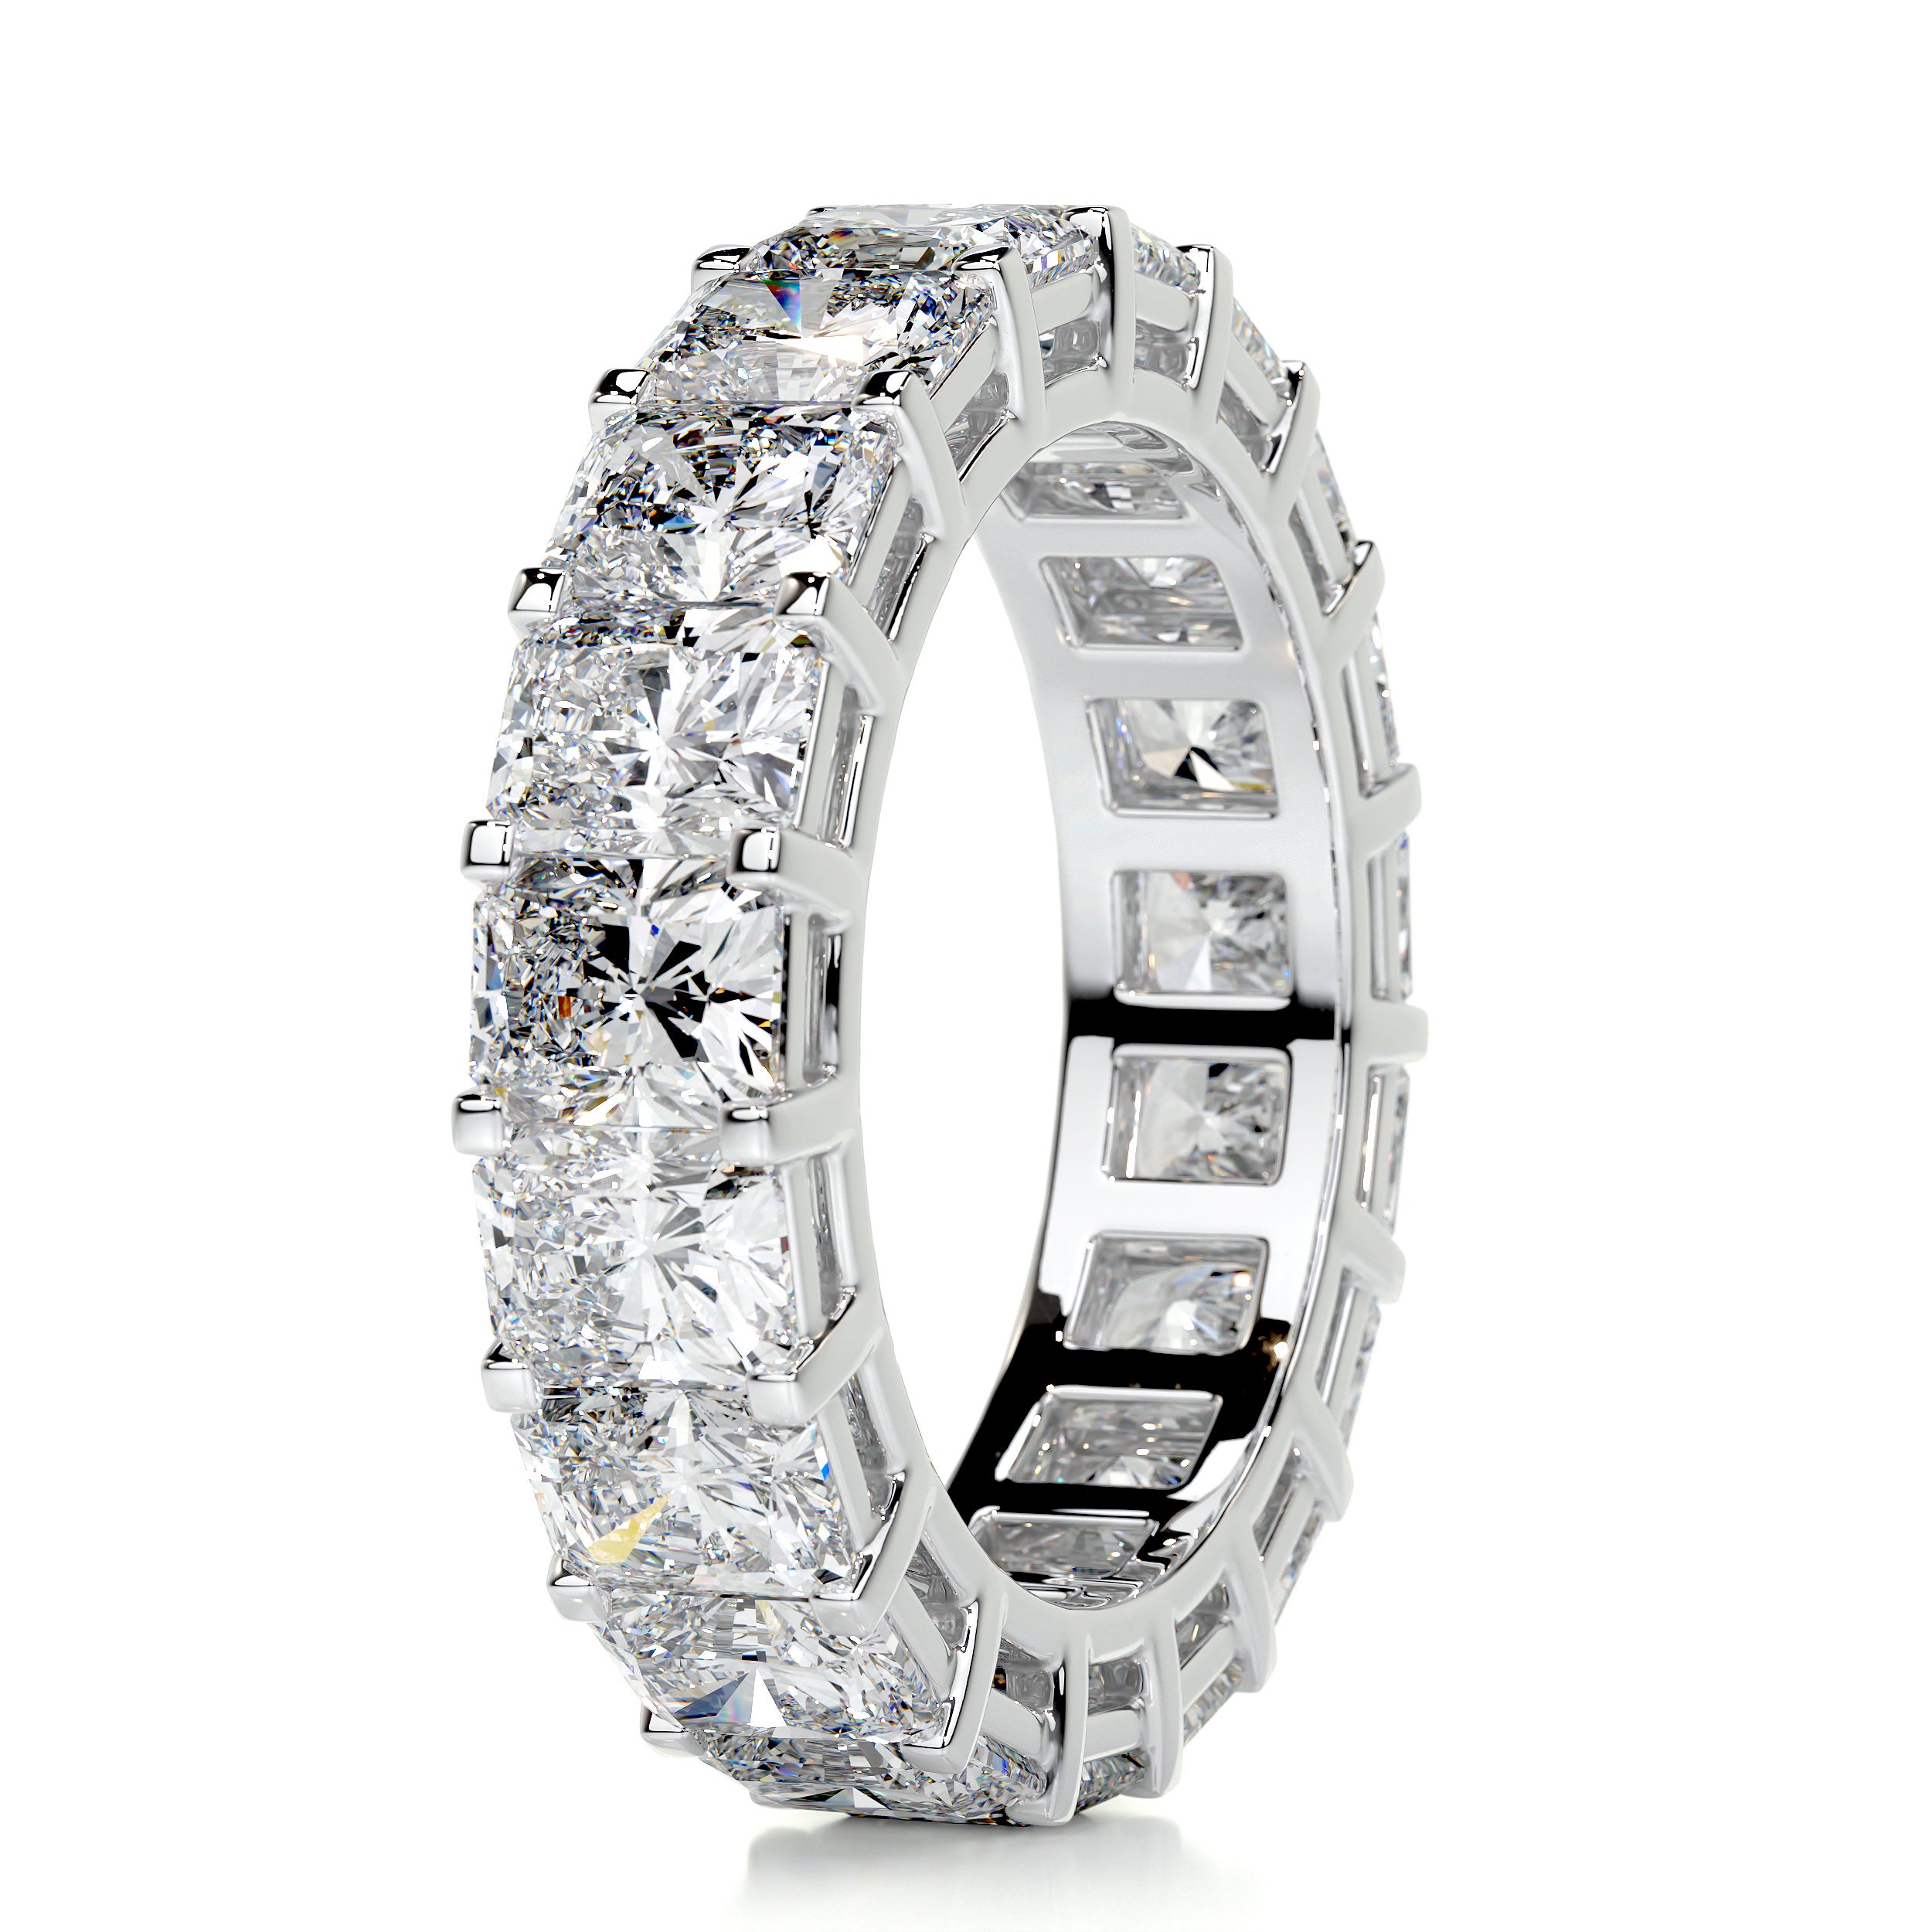 Andi Eternity Wedding Ring   (6 Carat) - Platinum